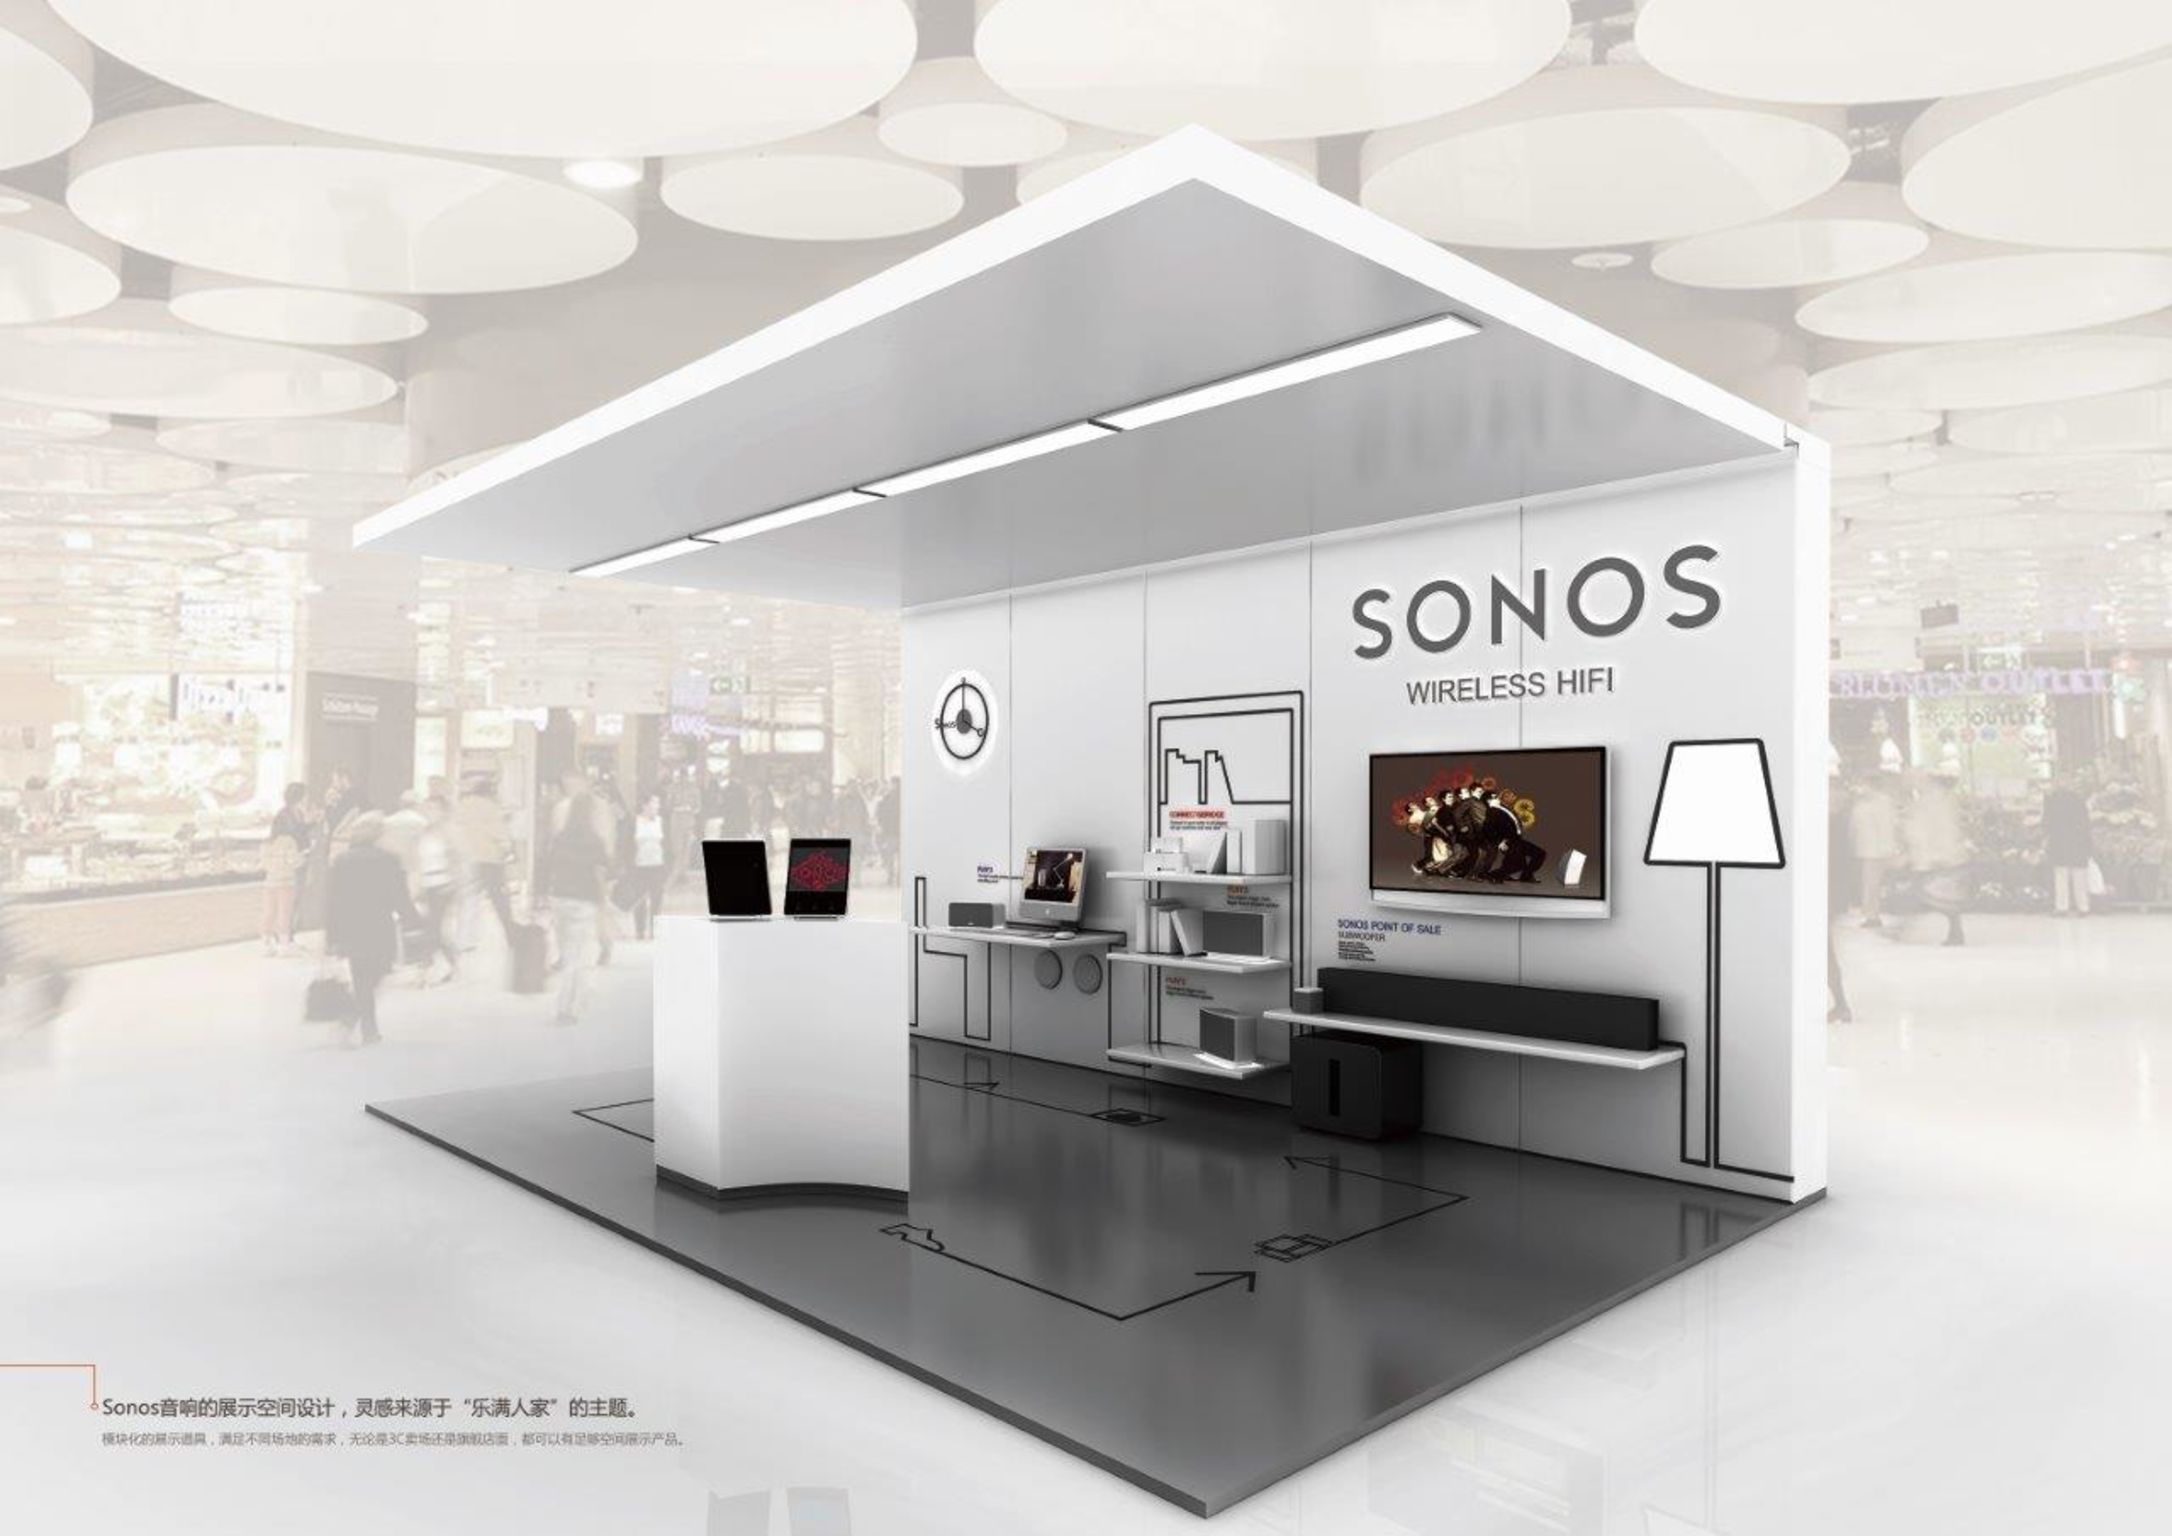 Sonos HiFi display space